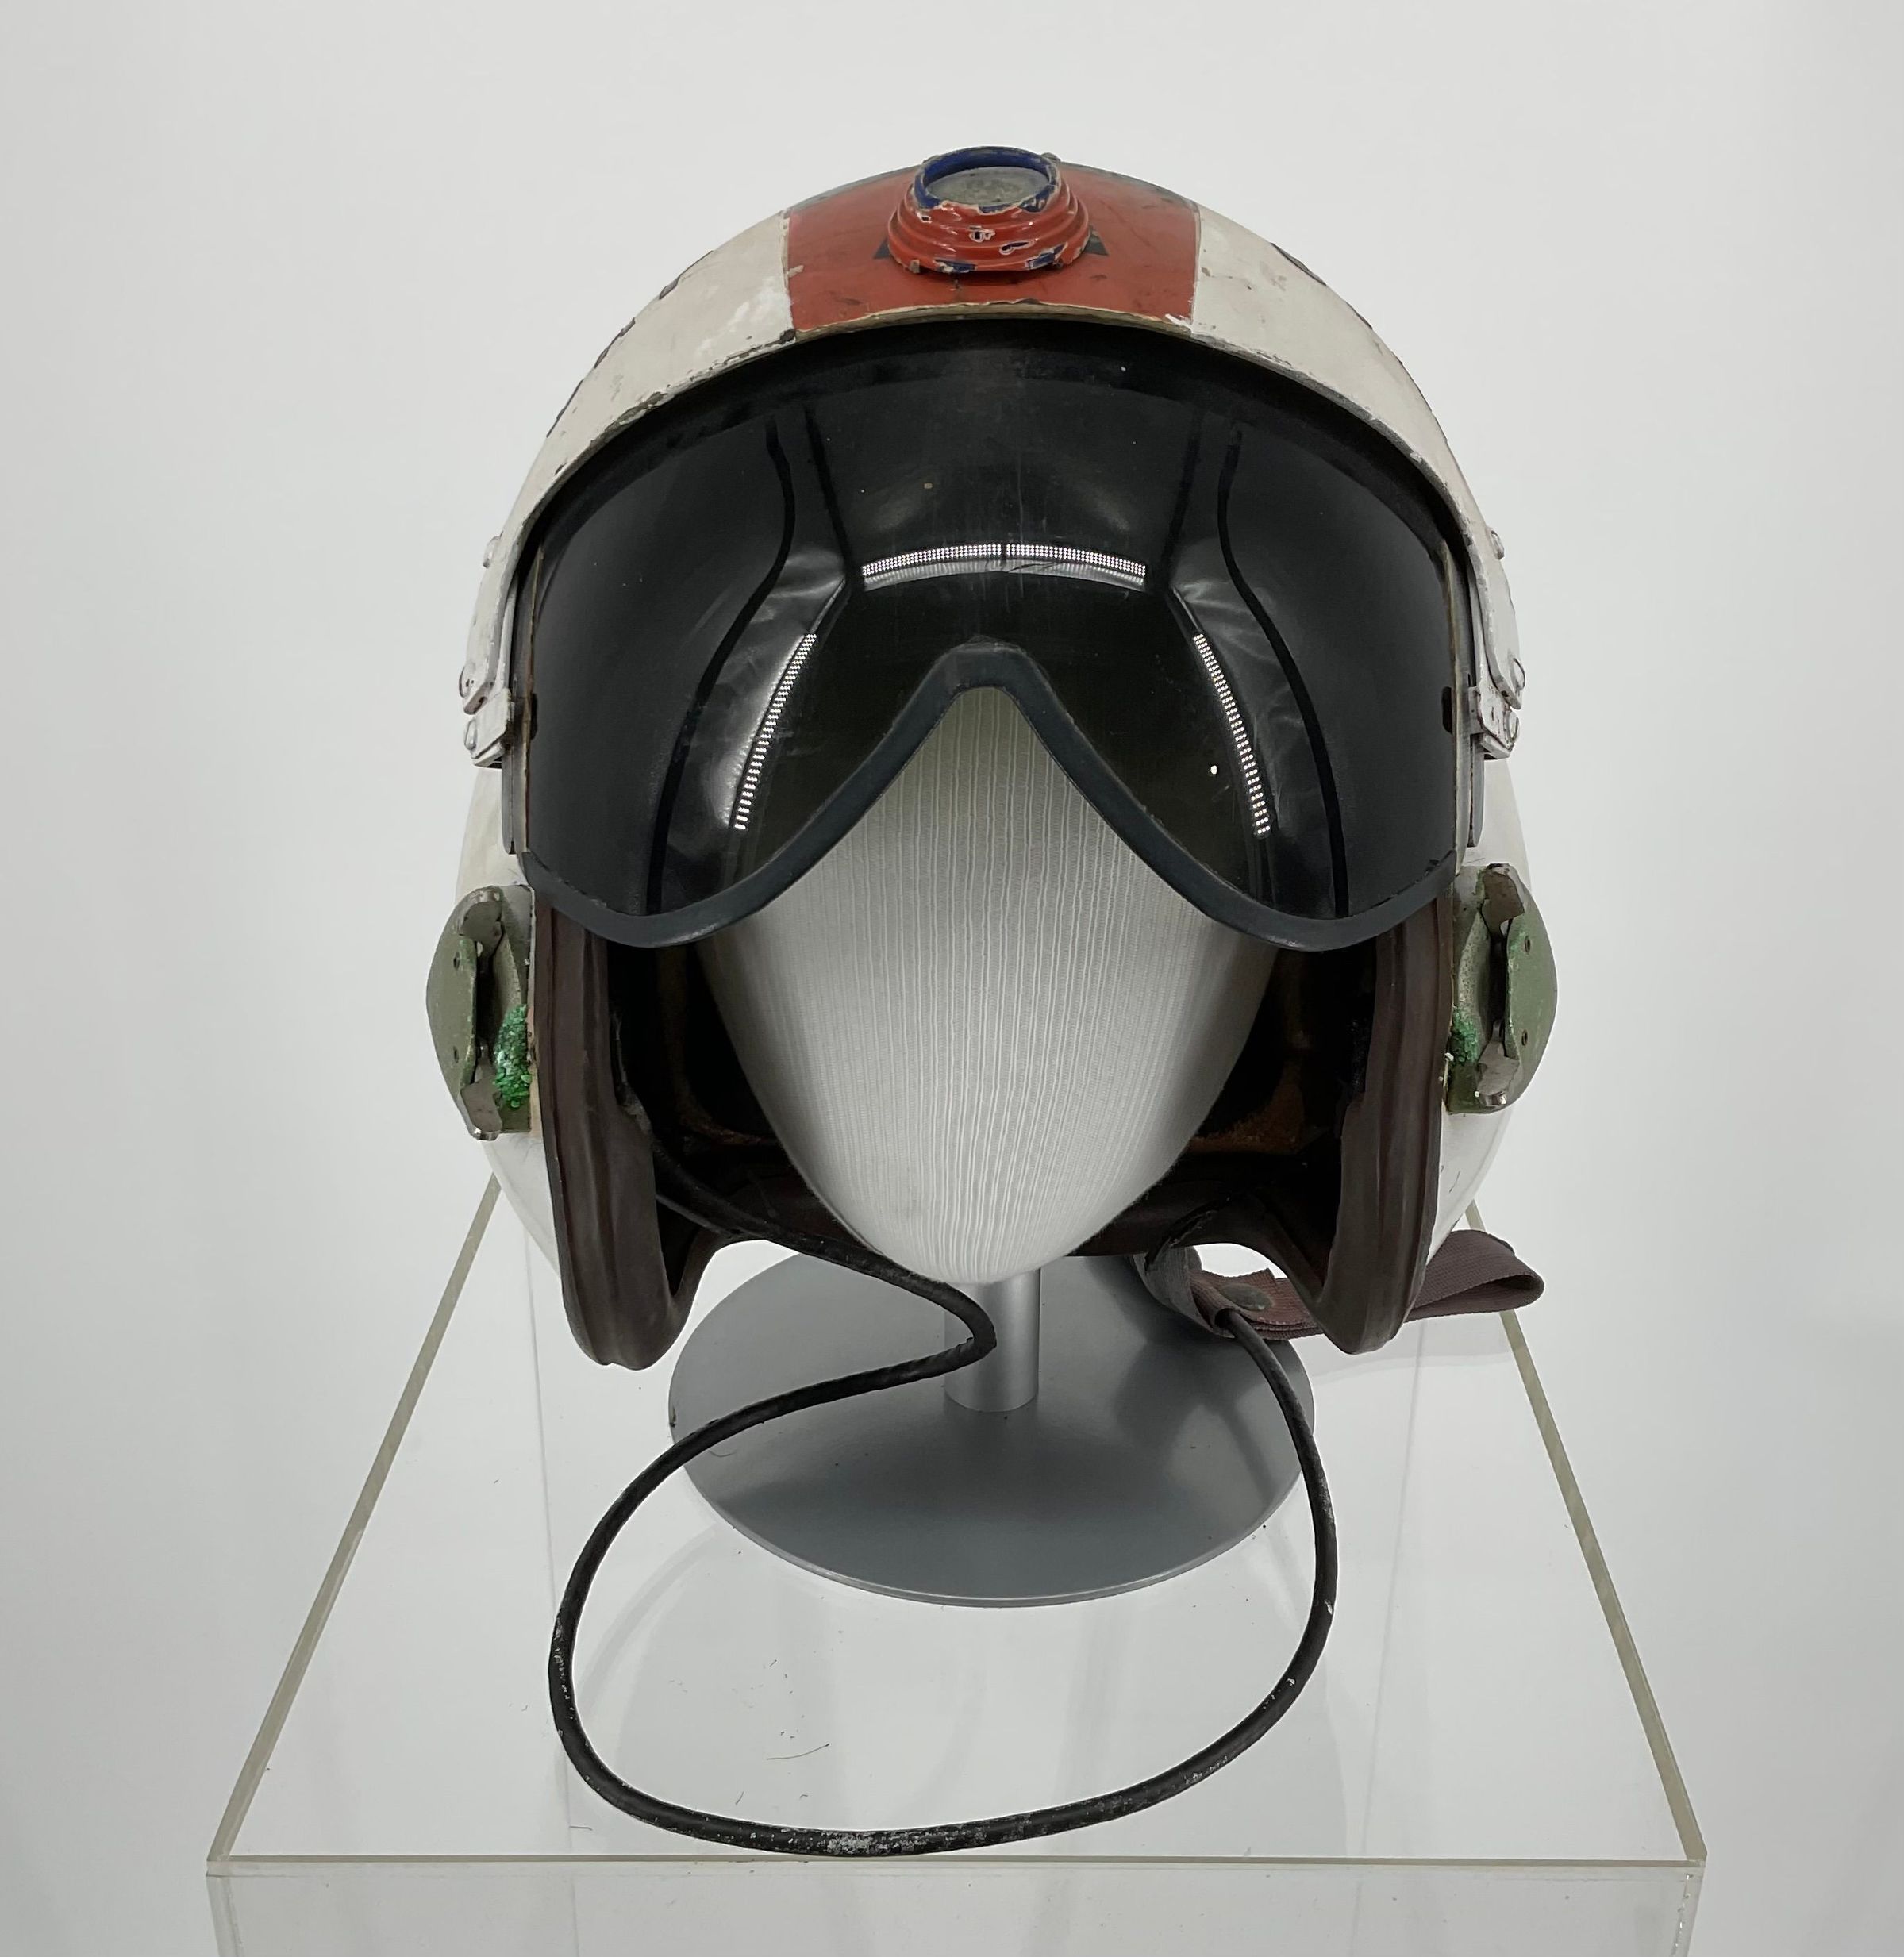 Primary Image of Flight Helmet of James Cain